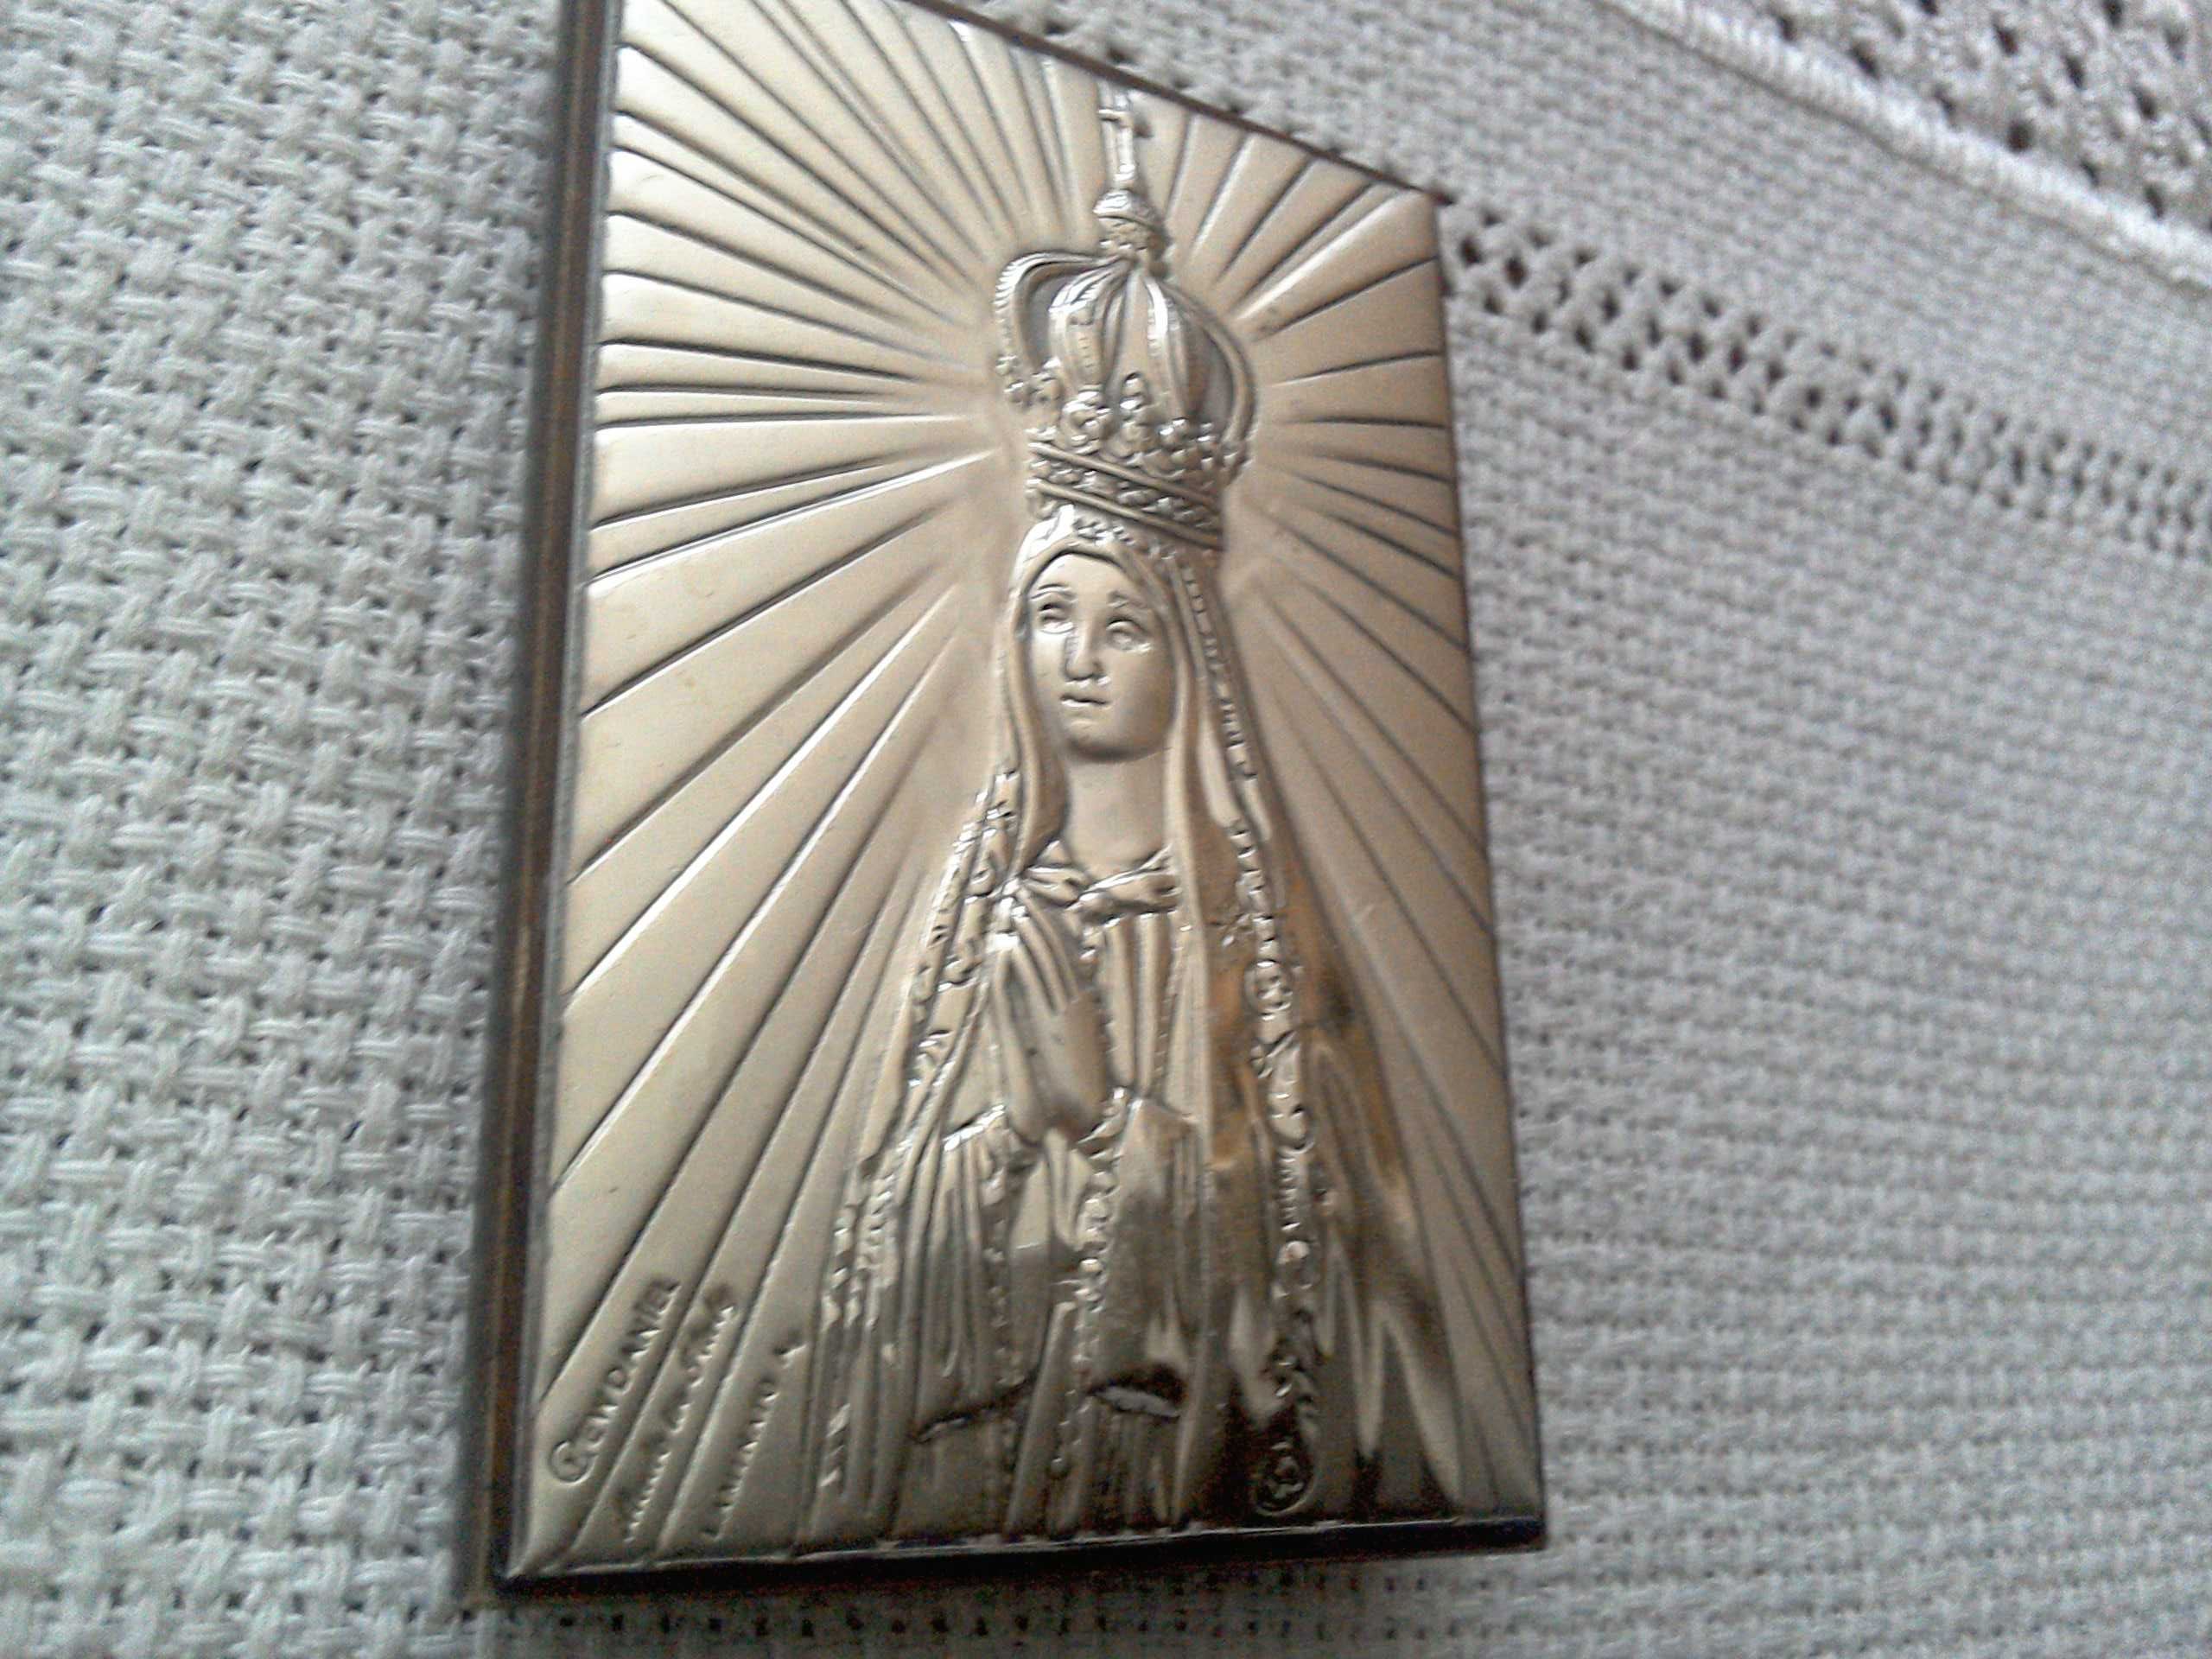 Icoana Iconiță argint marcat și lemn - 8 cm x 5 cm